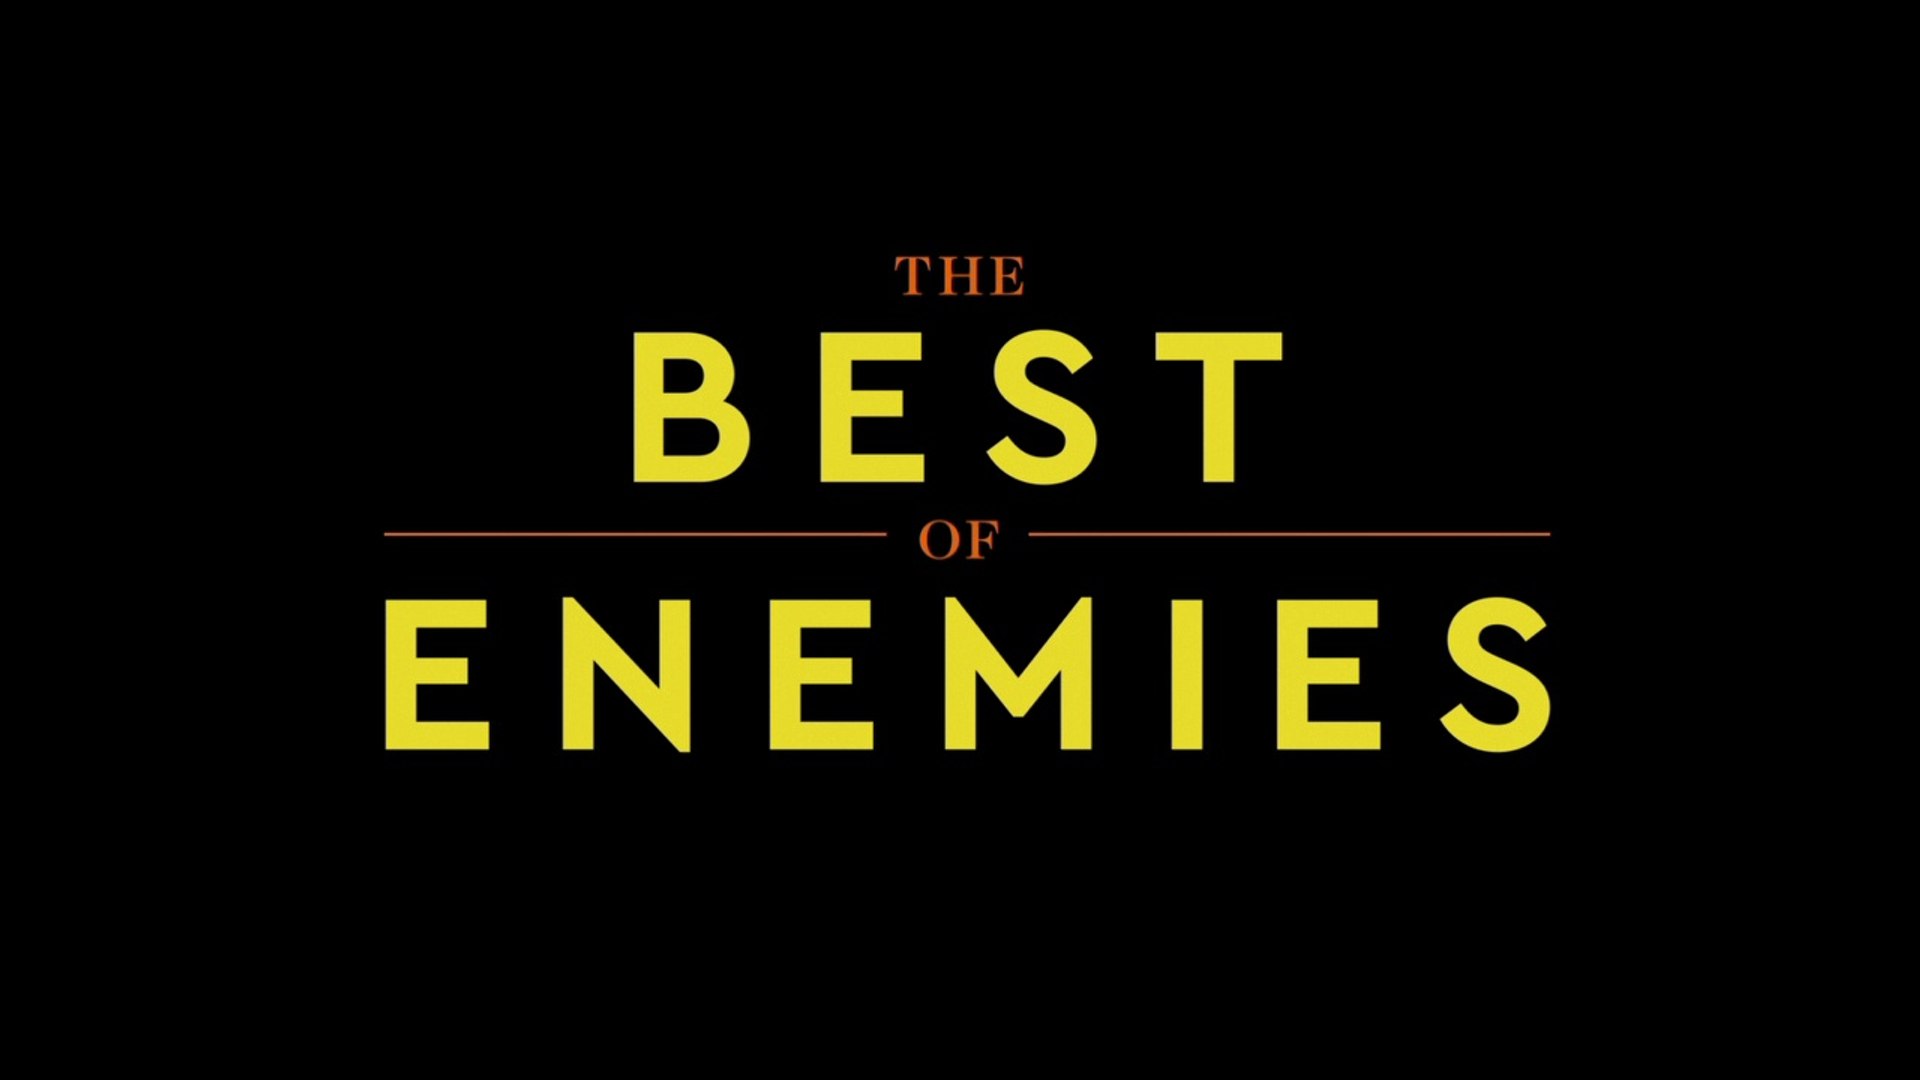 The Best Of Enemies 19 Trailer Hd Video Dailymotion